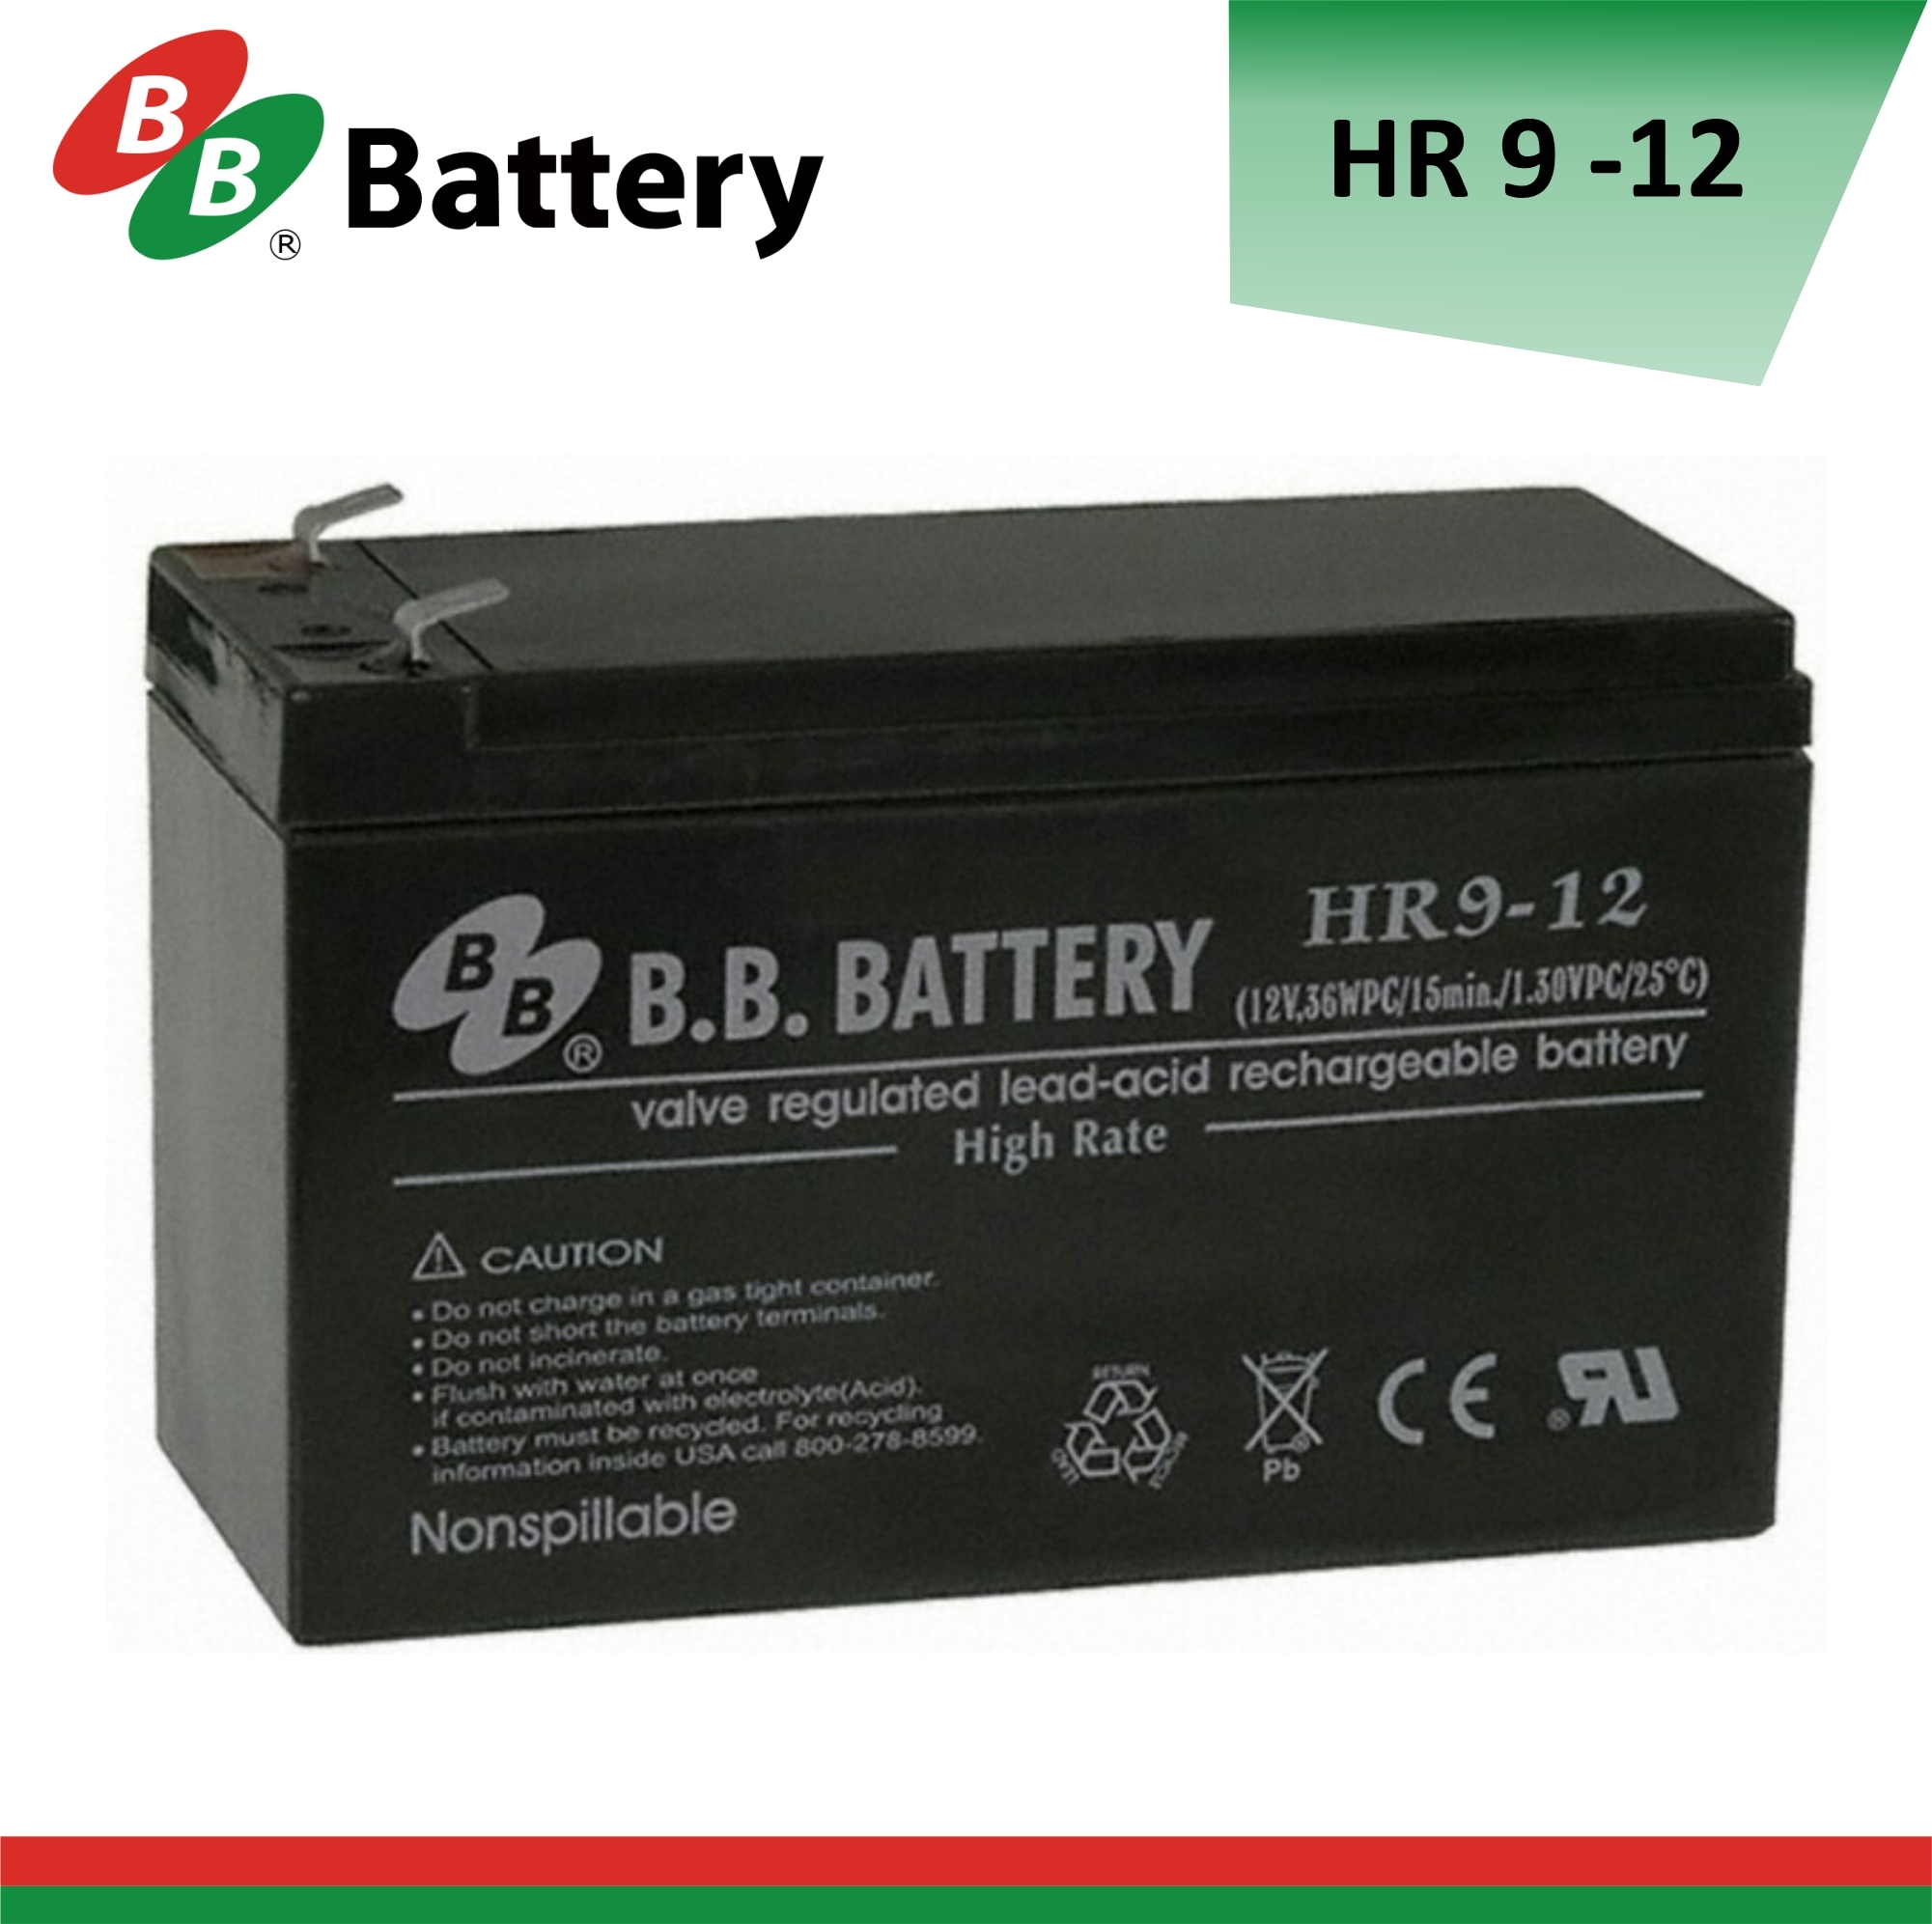 Battery 12 12. Аккумулятор BB Battary HR 9-12. Батарея BB Battery hr9-12. Батарея аккумуляторная HR 9-12 B.B. Battery. Батарея b.b. Battery hr9-6.